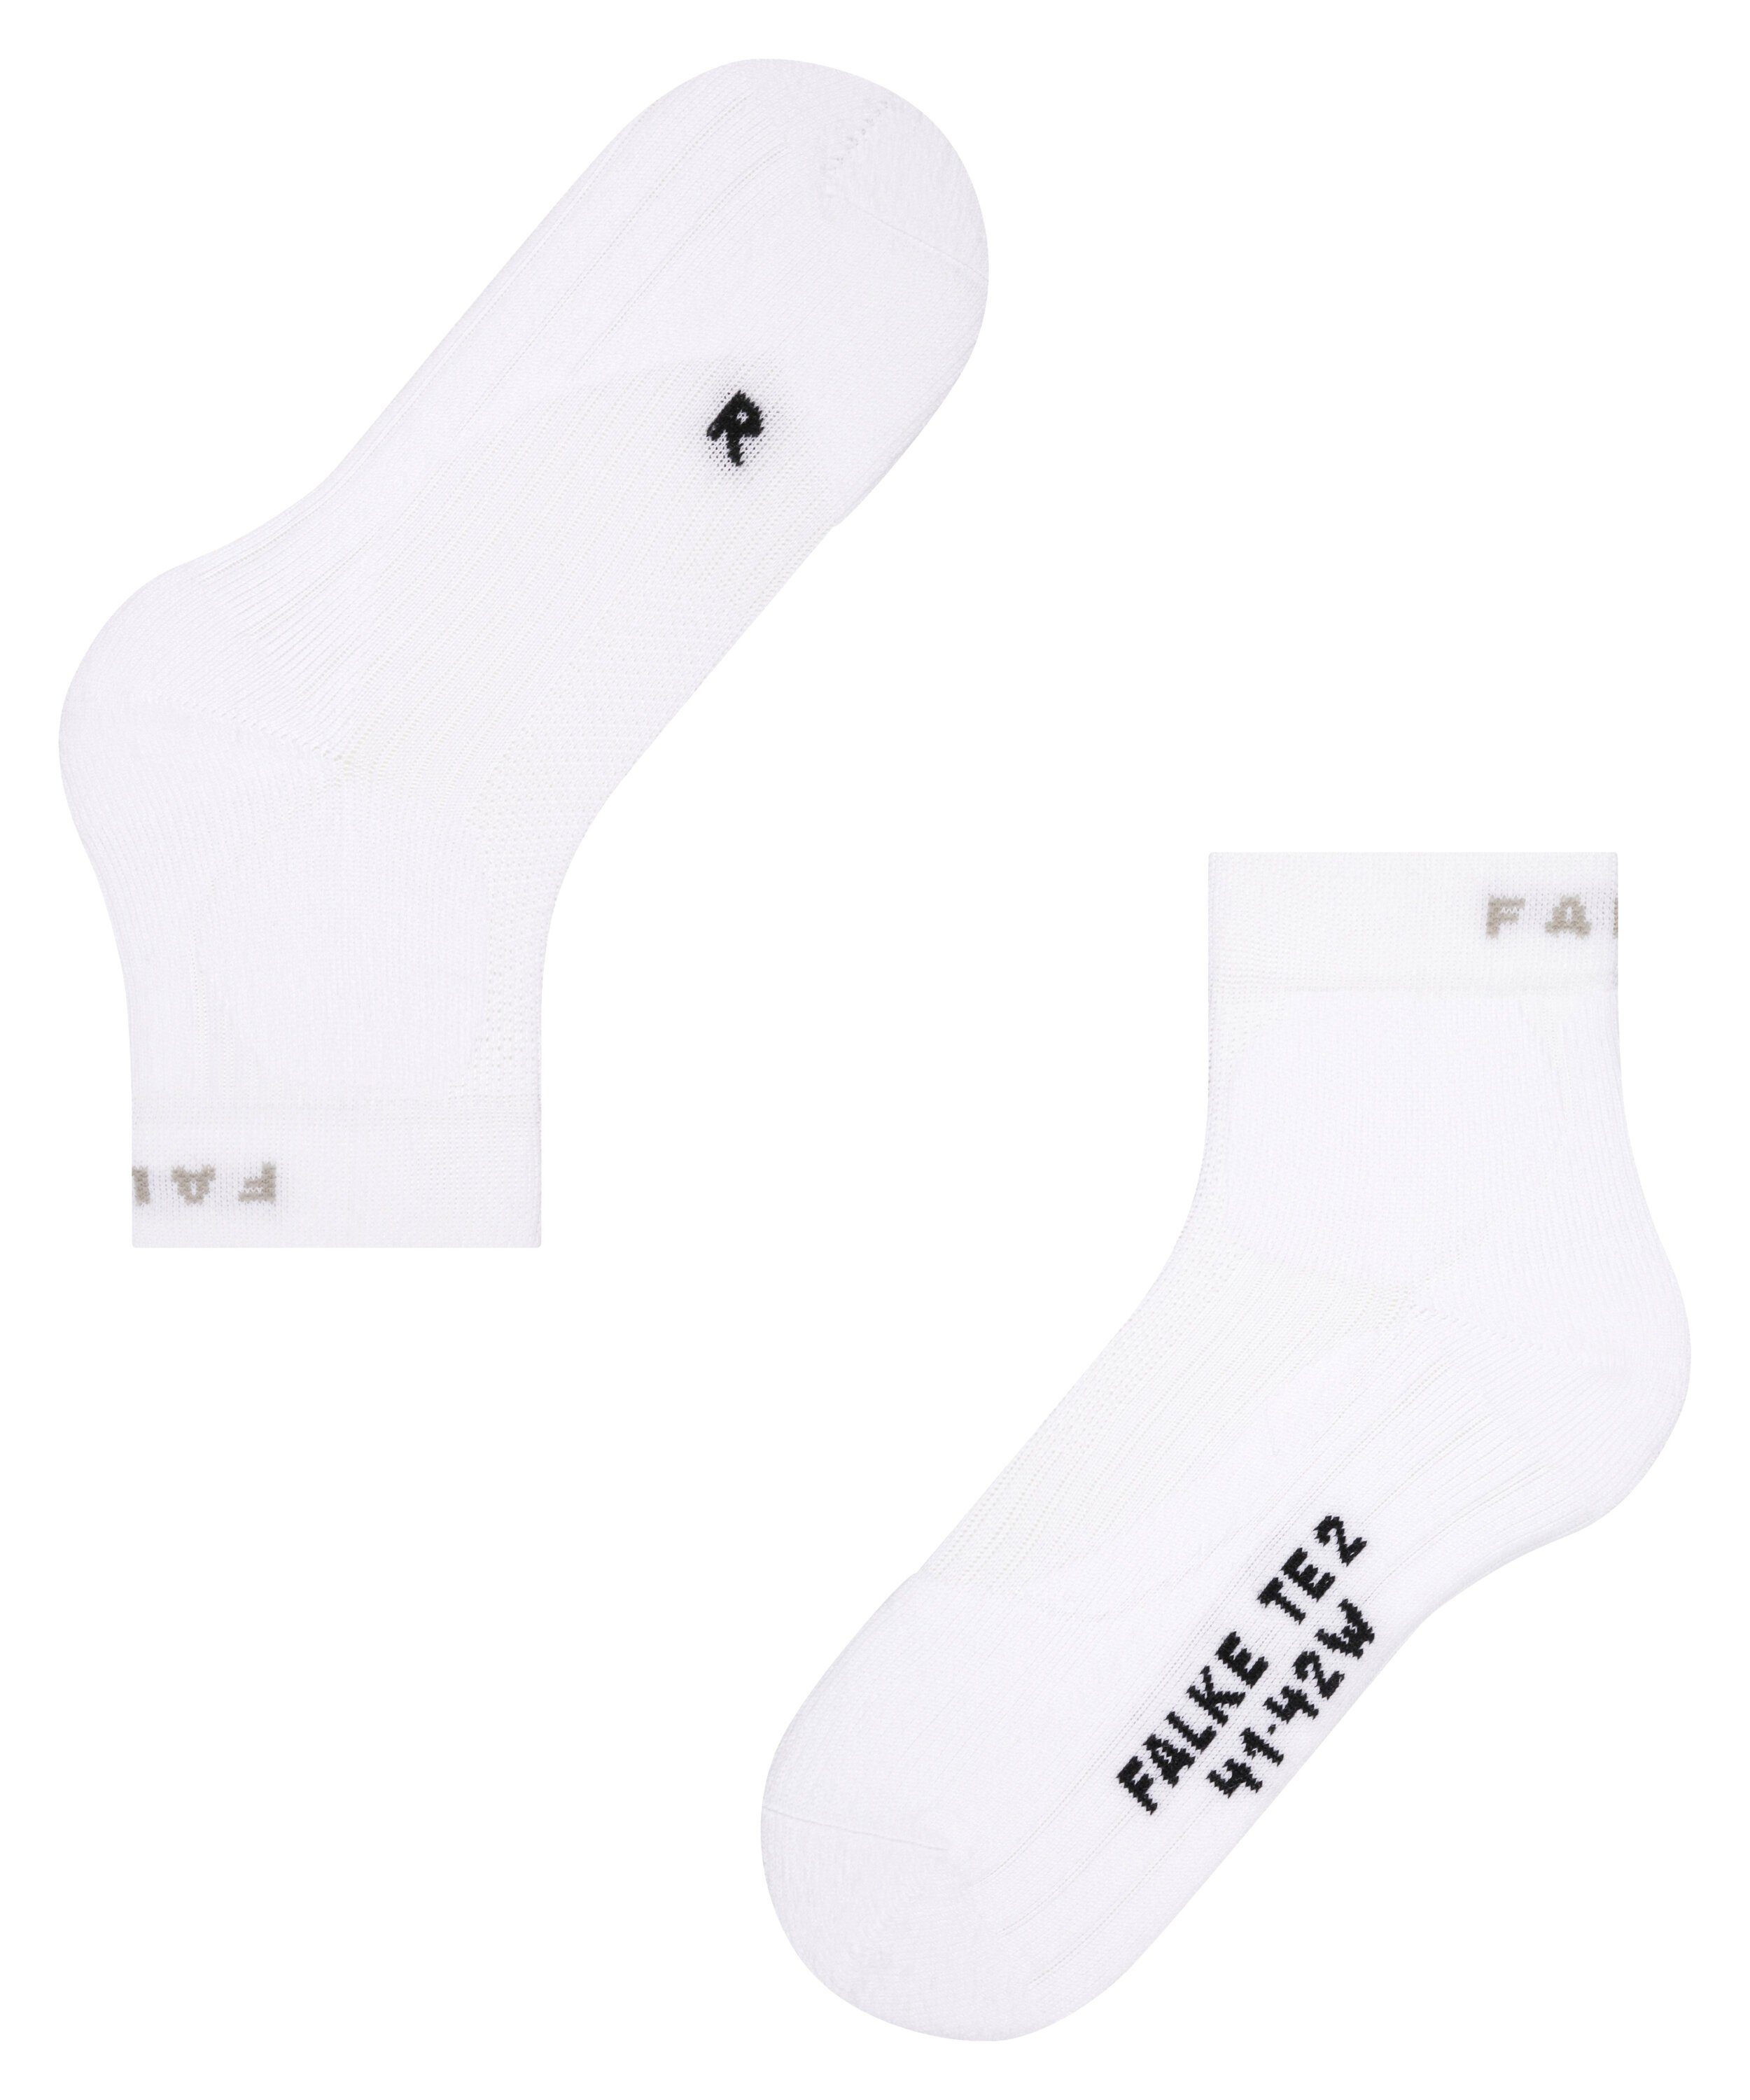 Stabilisierende Hartplätze TE2 FALKE für Socken white (2000) (1-Paar) Tennissocken Short